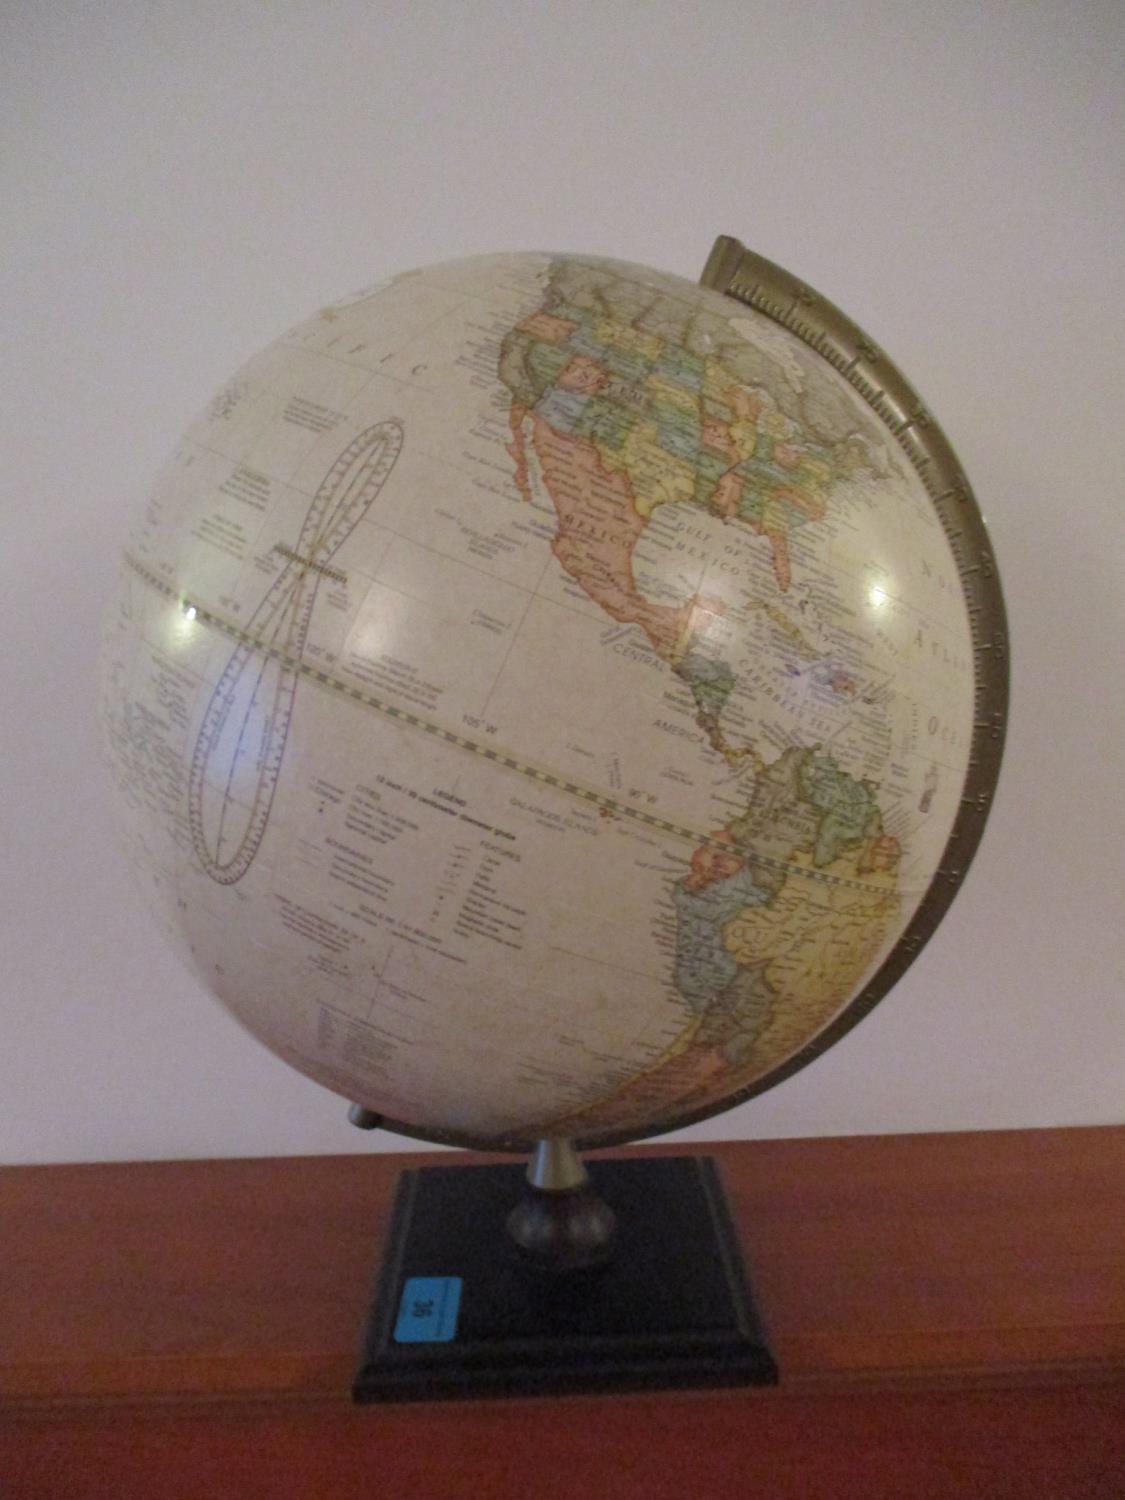 A George F Cam classic globe on stand